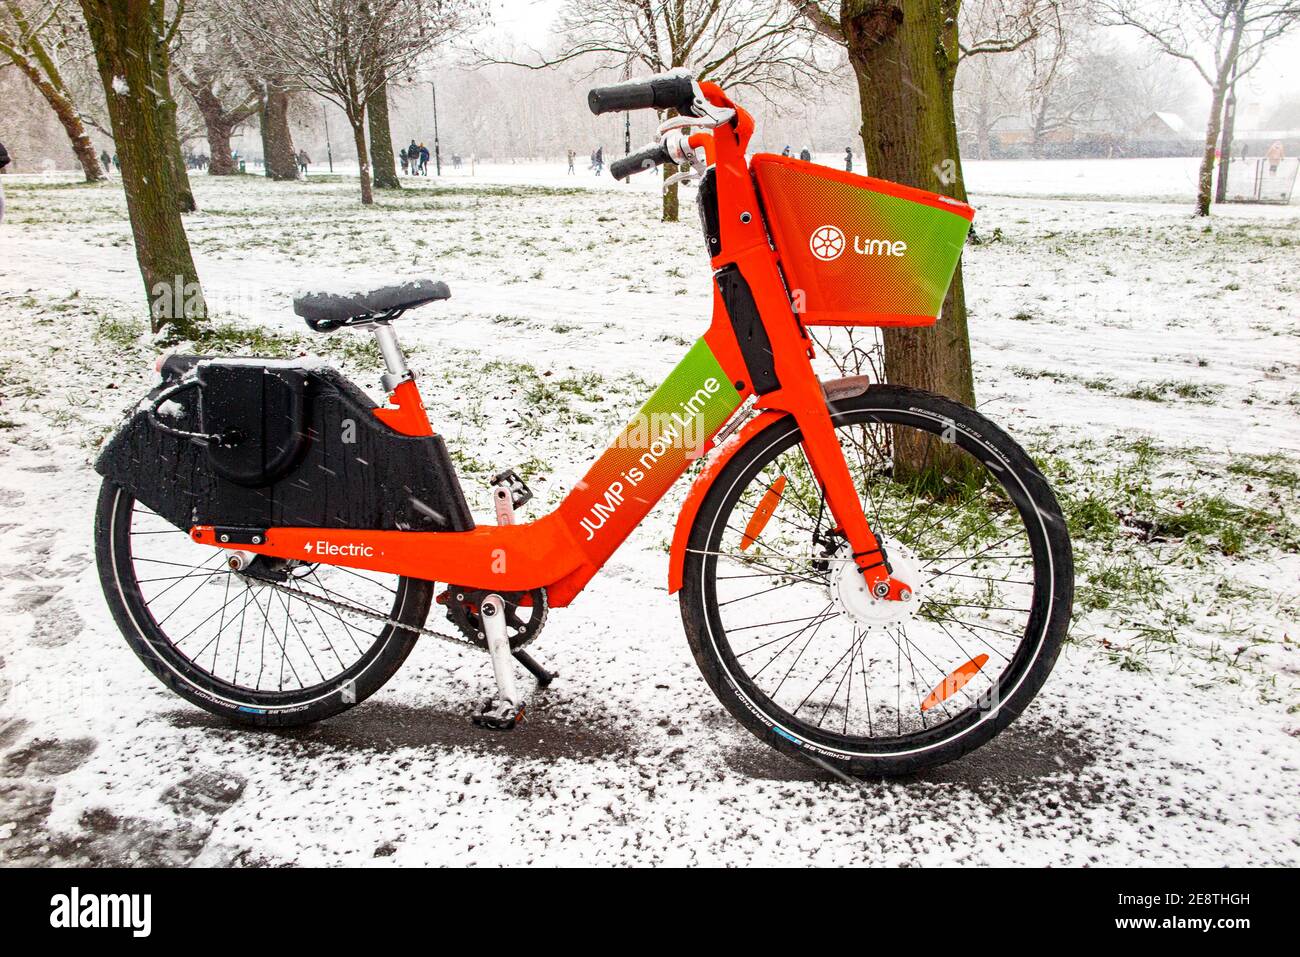 A jJmp electric rental bike in a London park in the snow Stock Photo